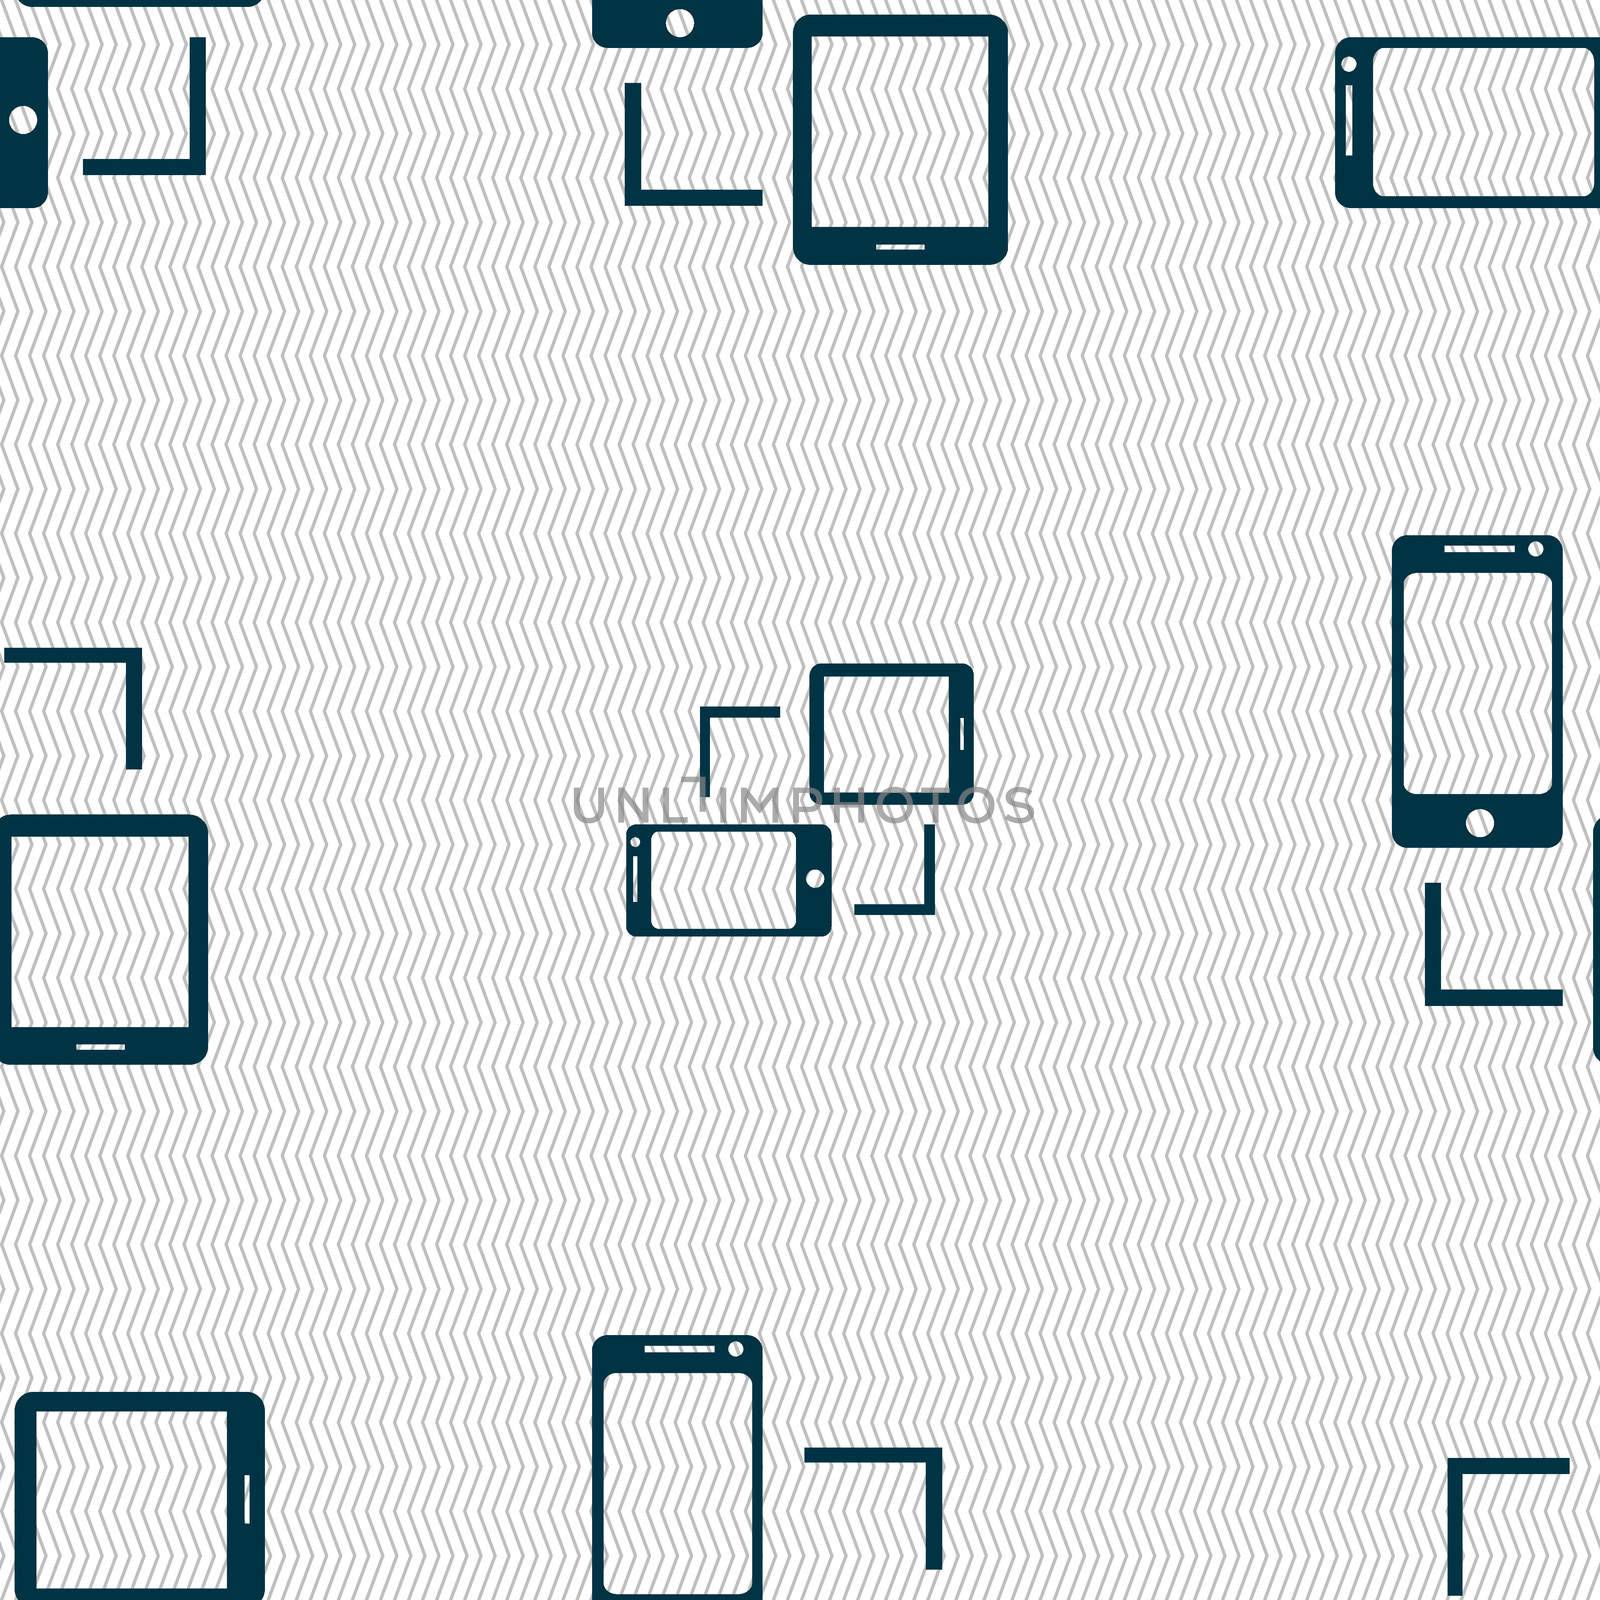 Synchronization sign icon. communicators sync symbol. Data exchange. Seamless abstract background with geometric shapes. illustration